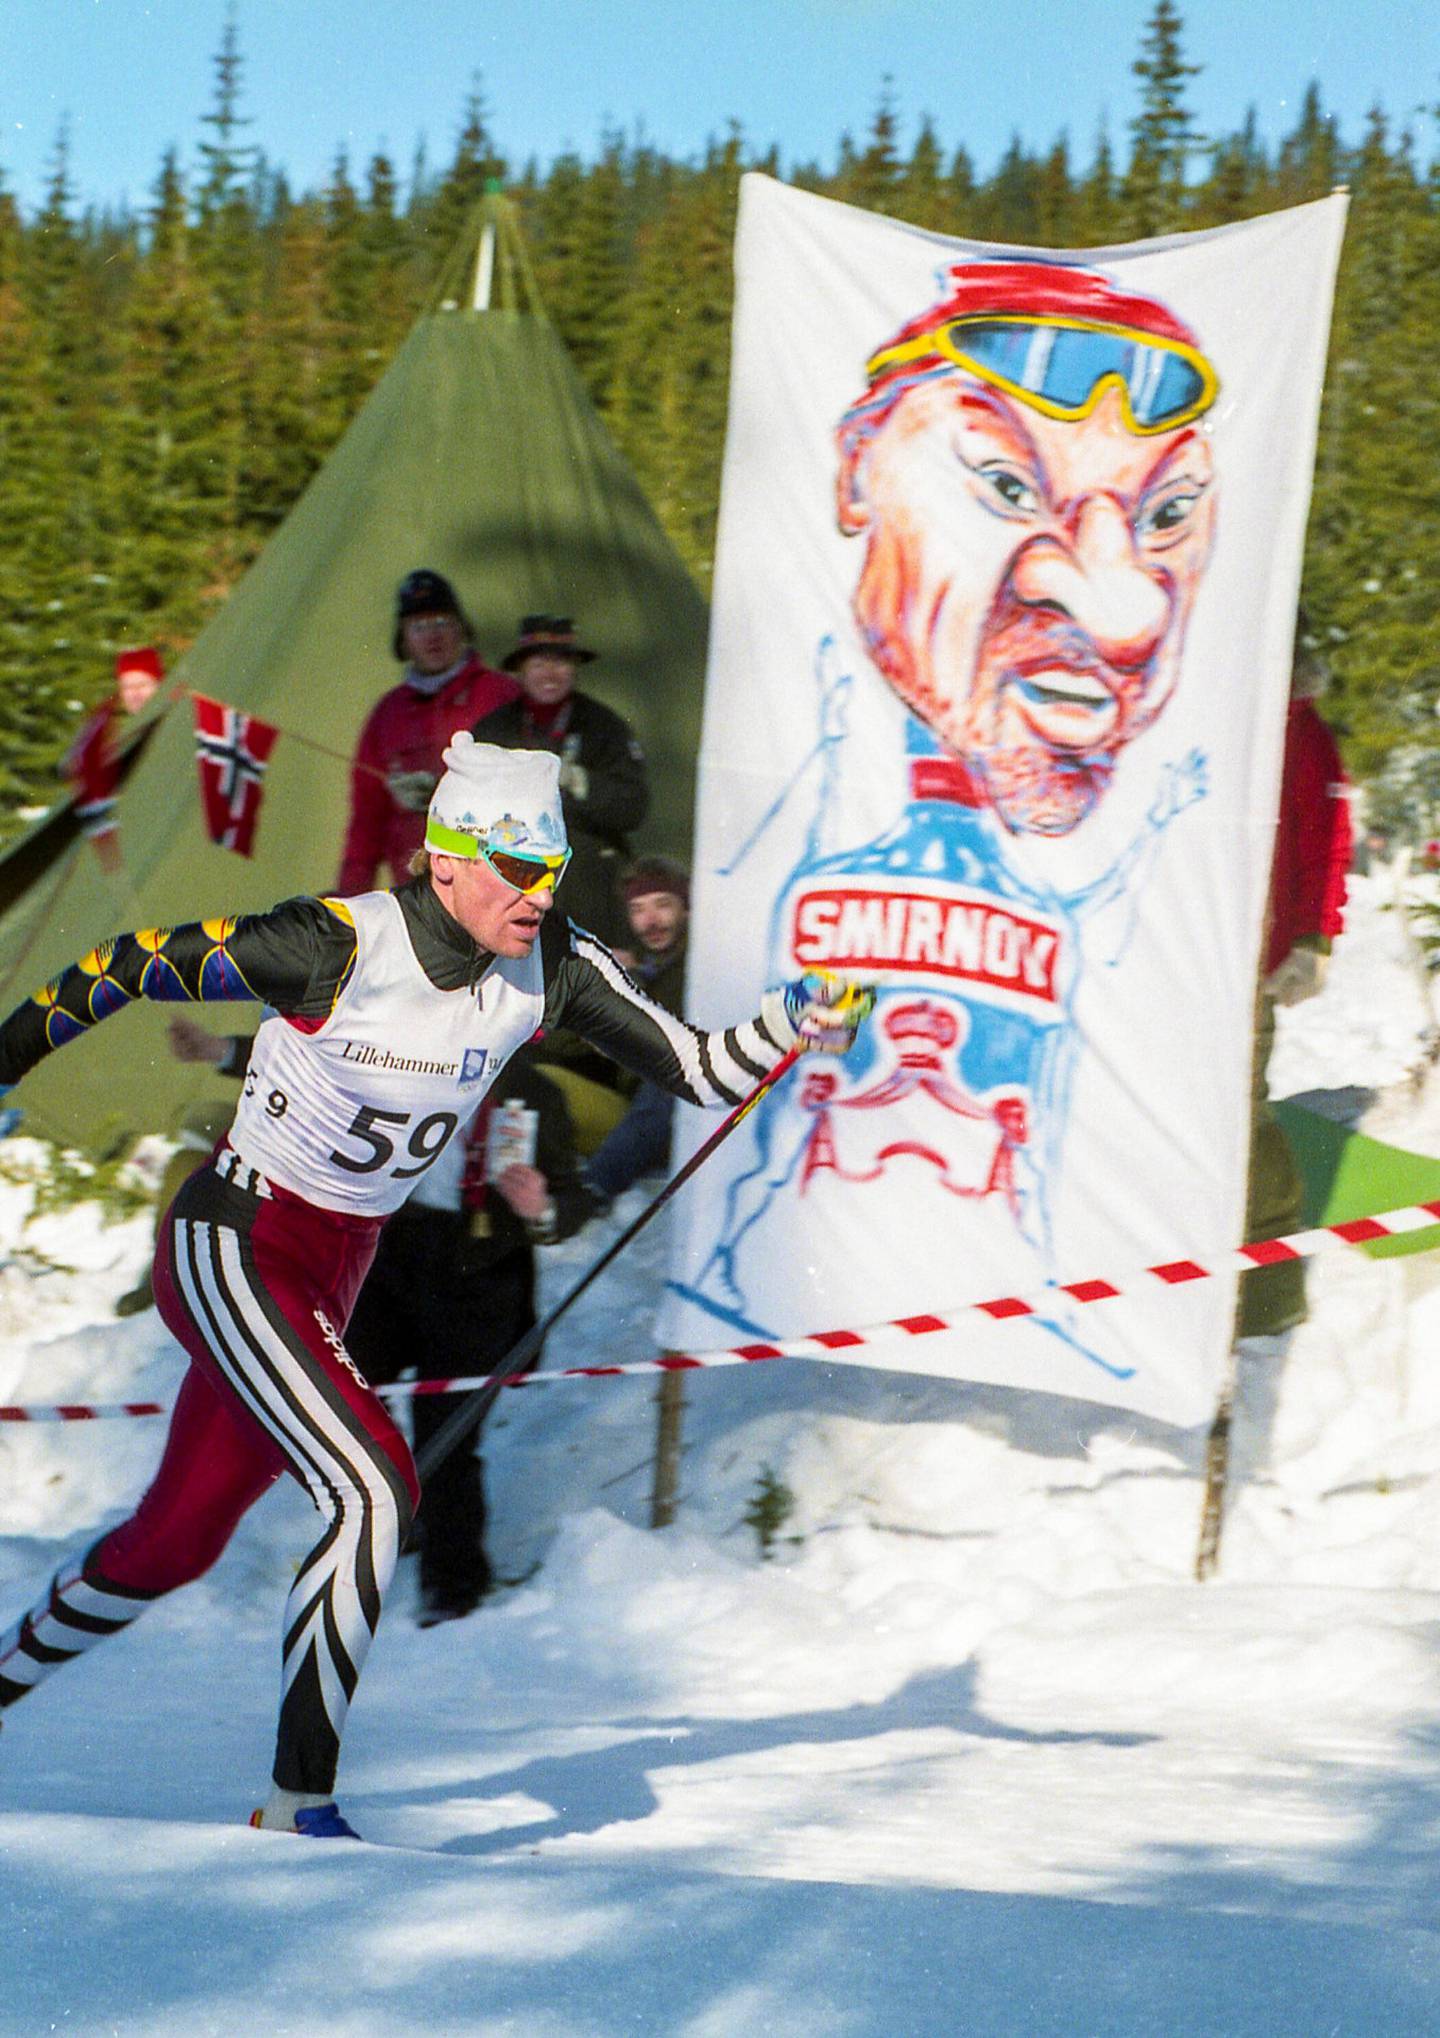 forbudt: Vladimir Smirnov vant den avsluttende femmila på Lillehammer. Smirnoff-reklamen ble for sterk for arrangøren. FOTO: VIDAR RUUD/NTB SCANPIX